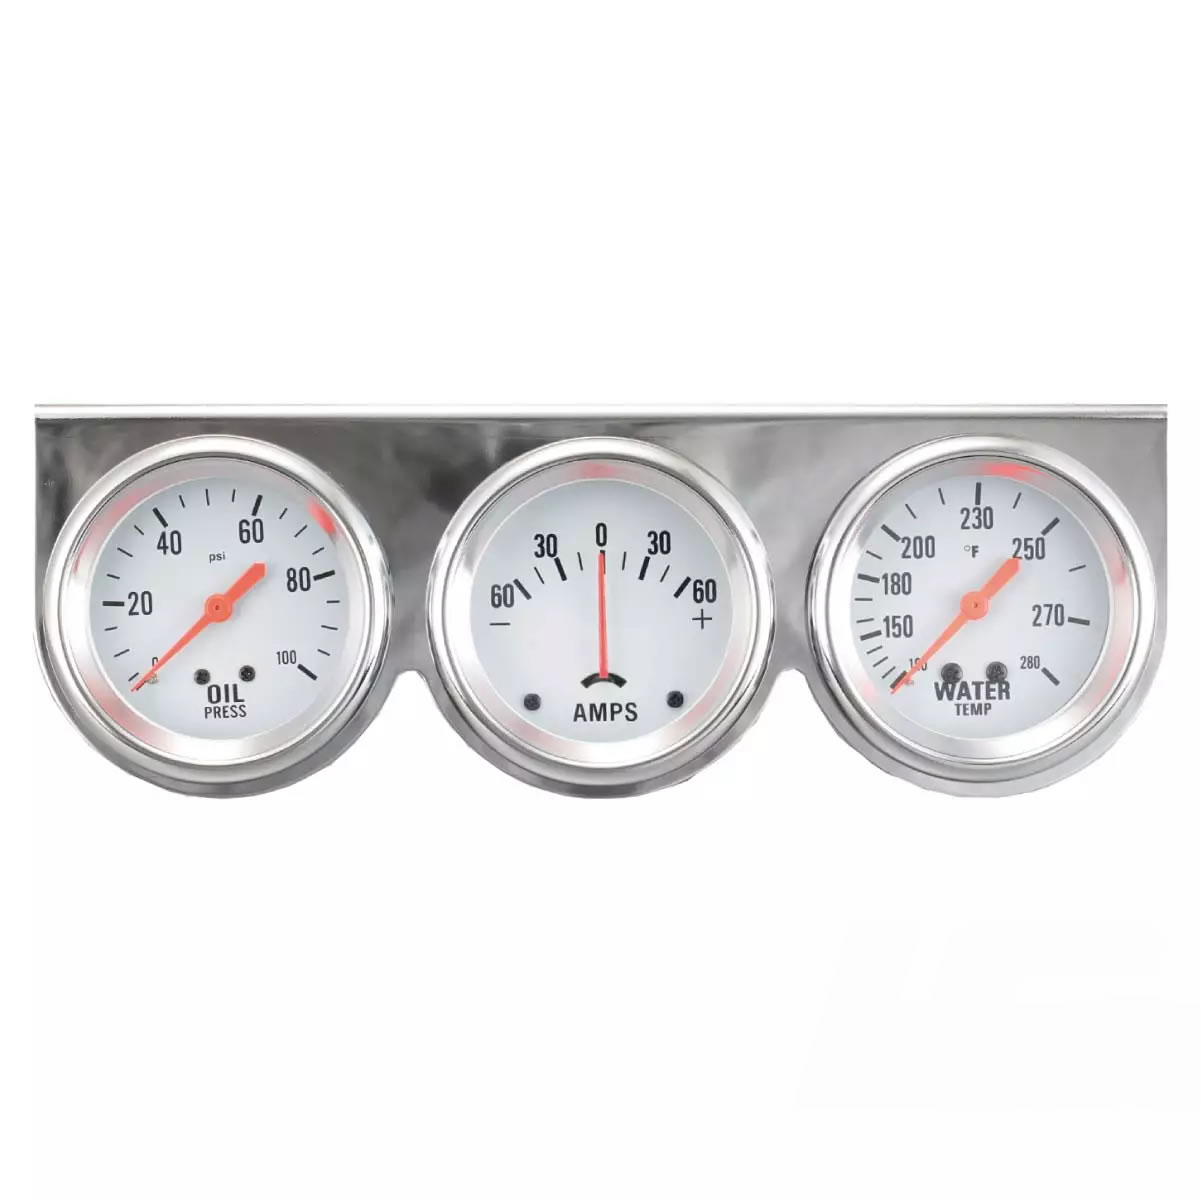 Oil Pressure-Volt-Water Temp gauges